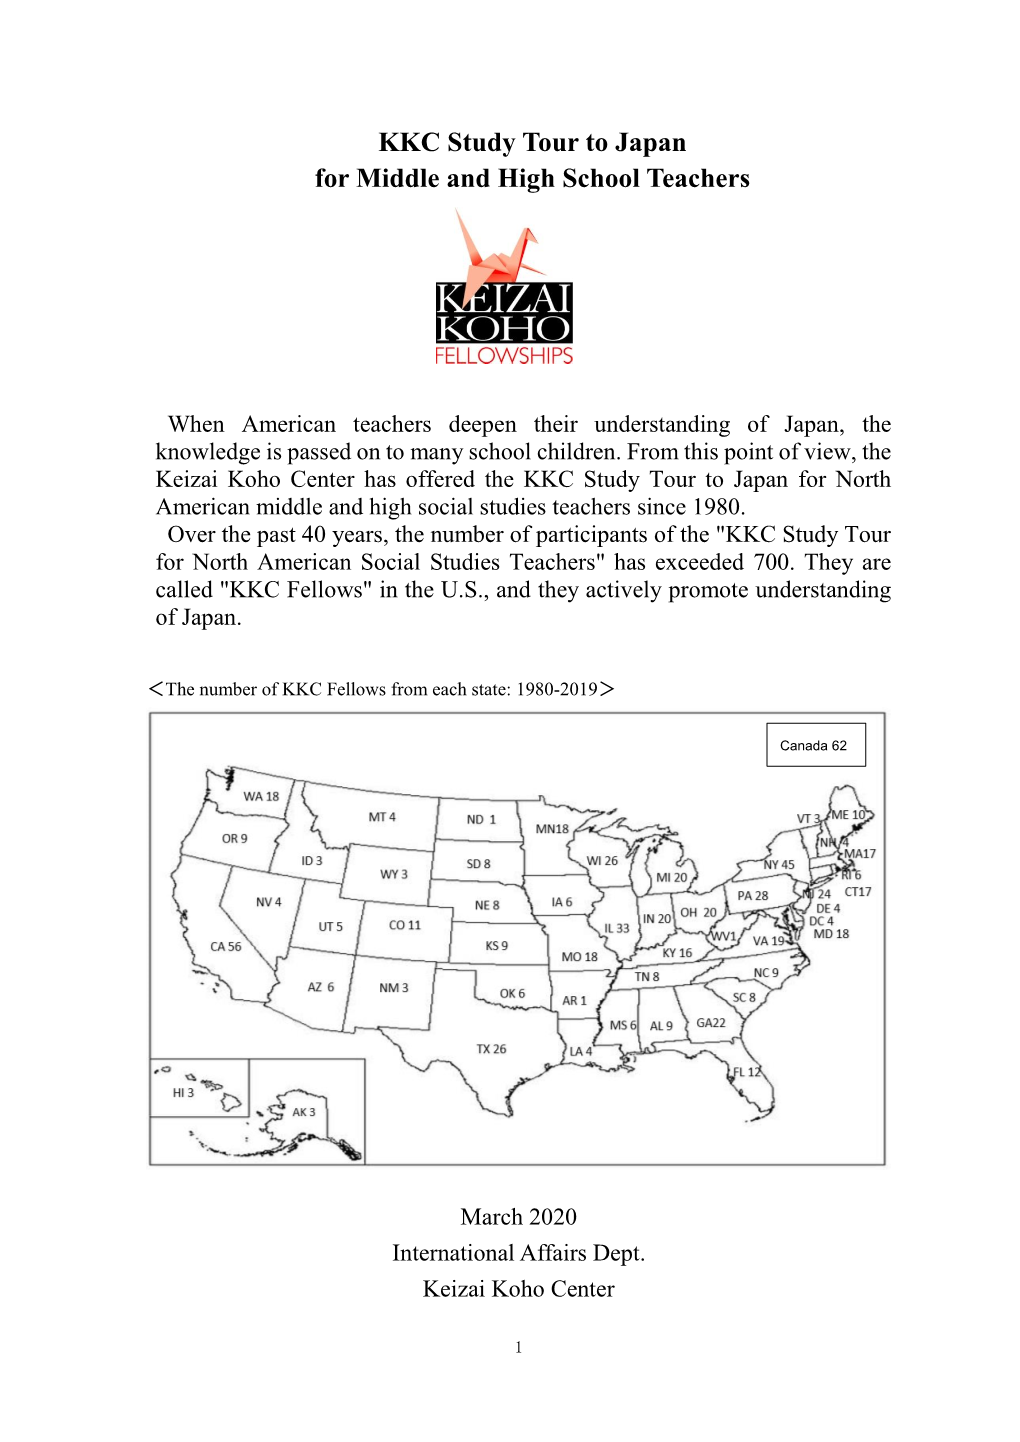 About the KKC Study Tour to Japan (PDF)